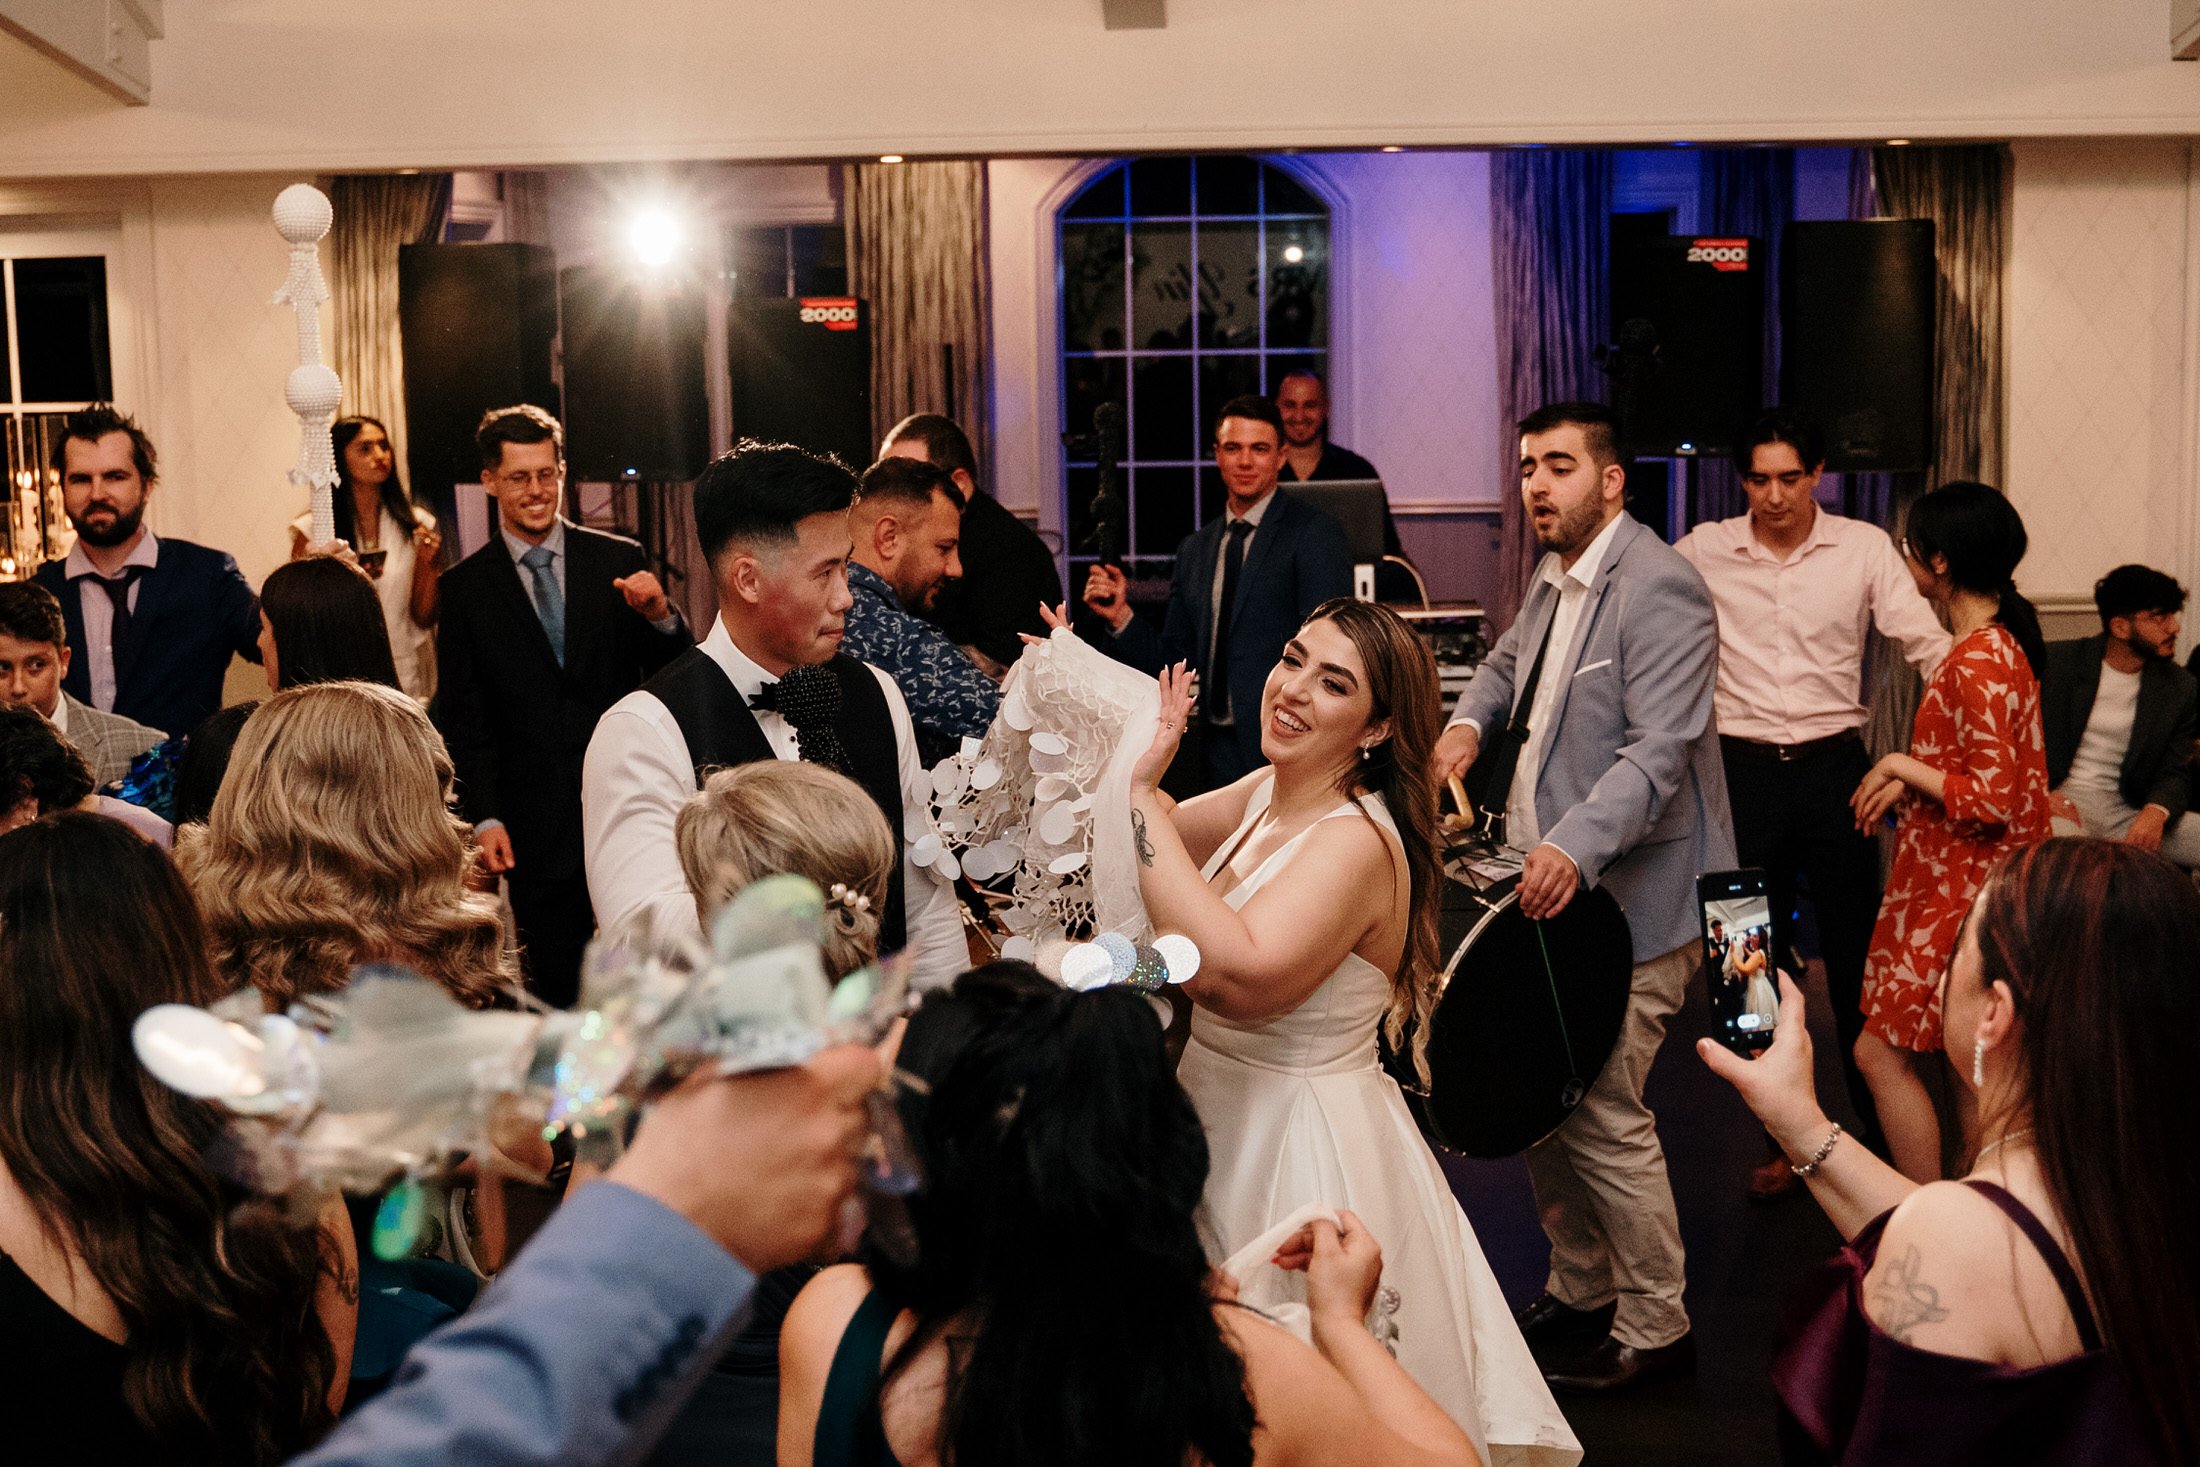 Auckland Wedding Photographer | Auckland Wedding Videographer | Auckland Wedding Venue | Bracu Estate Venue | South Auckland Venue | Wedding Reception | Middle Eastern Wedding Dancing